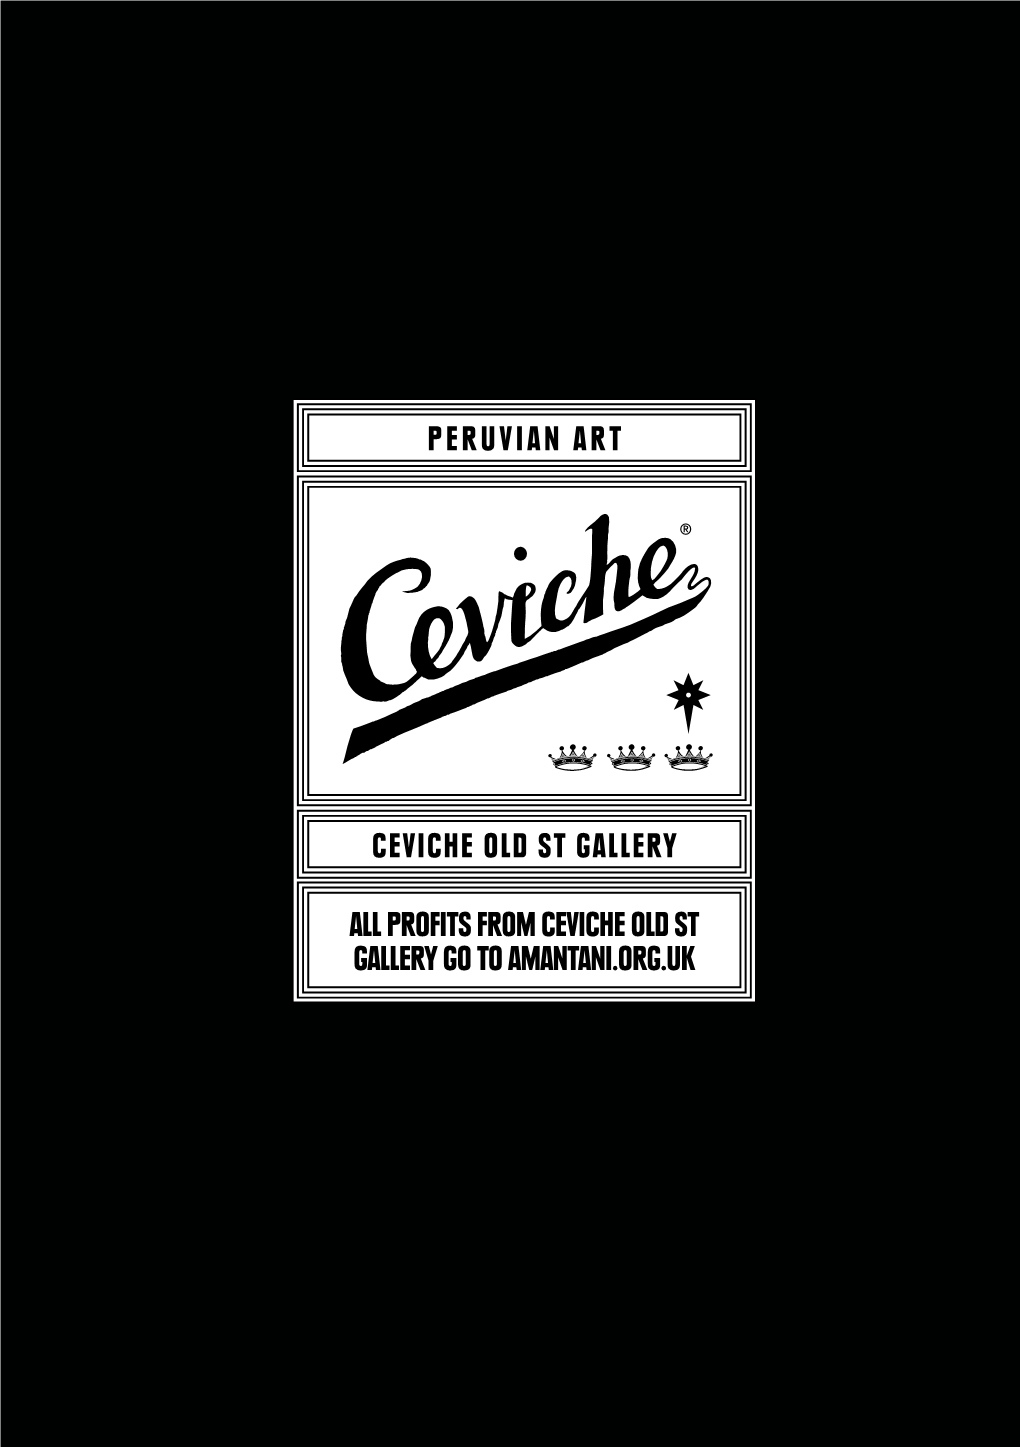 Ceviche Old St Gallery Peruvian Art All Profits